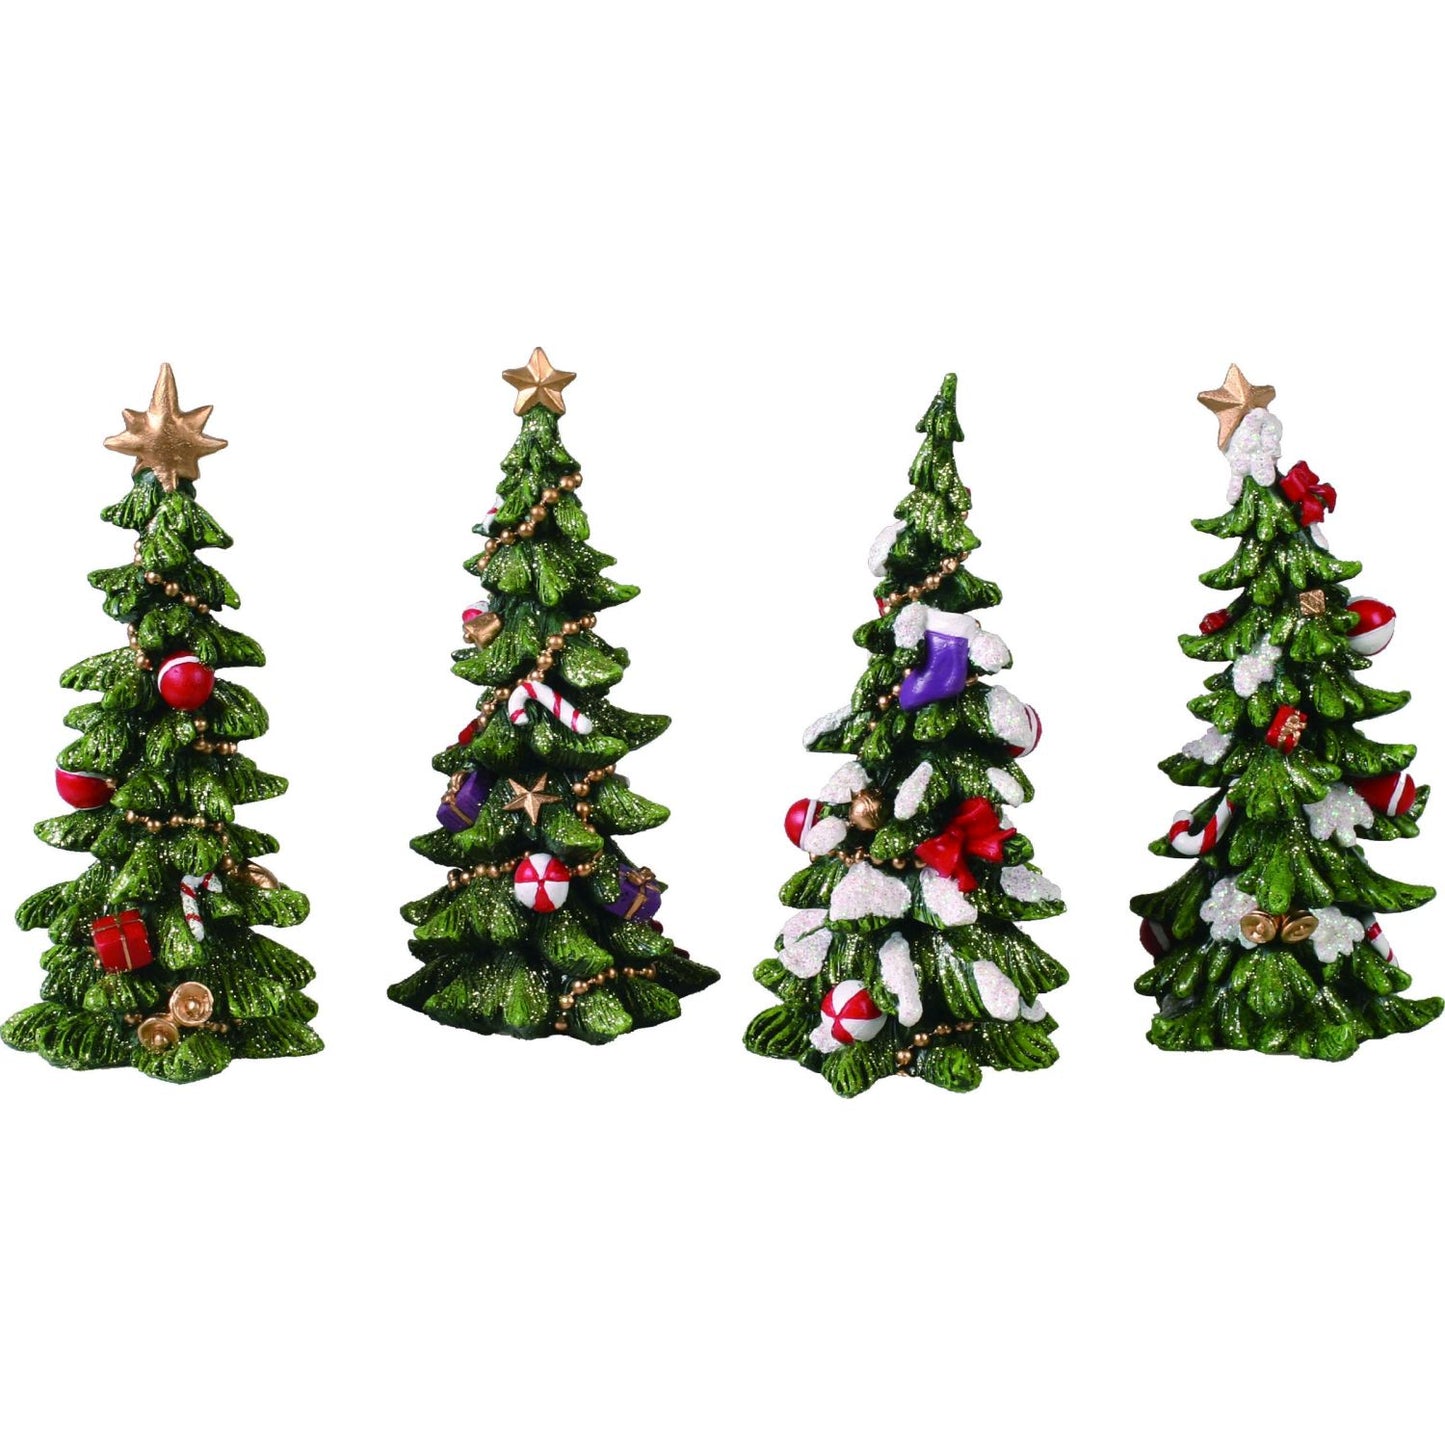 Transpac Resin Holiday Tree Figurine Set Of 4 Assortment